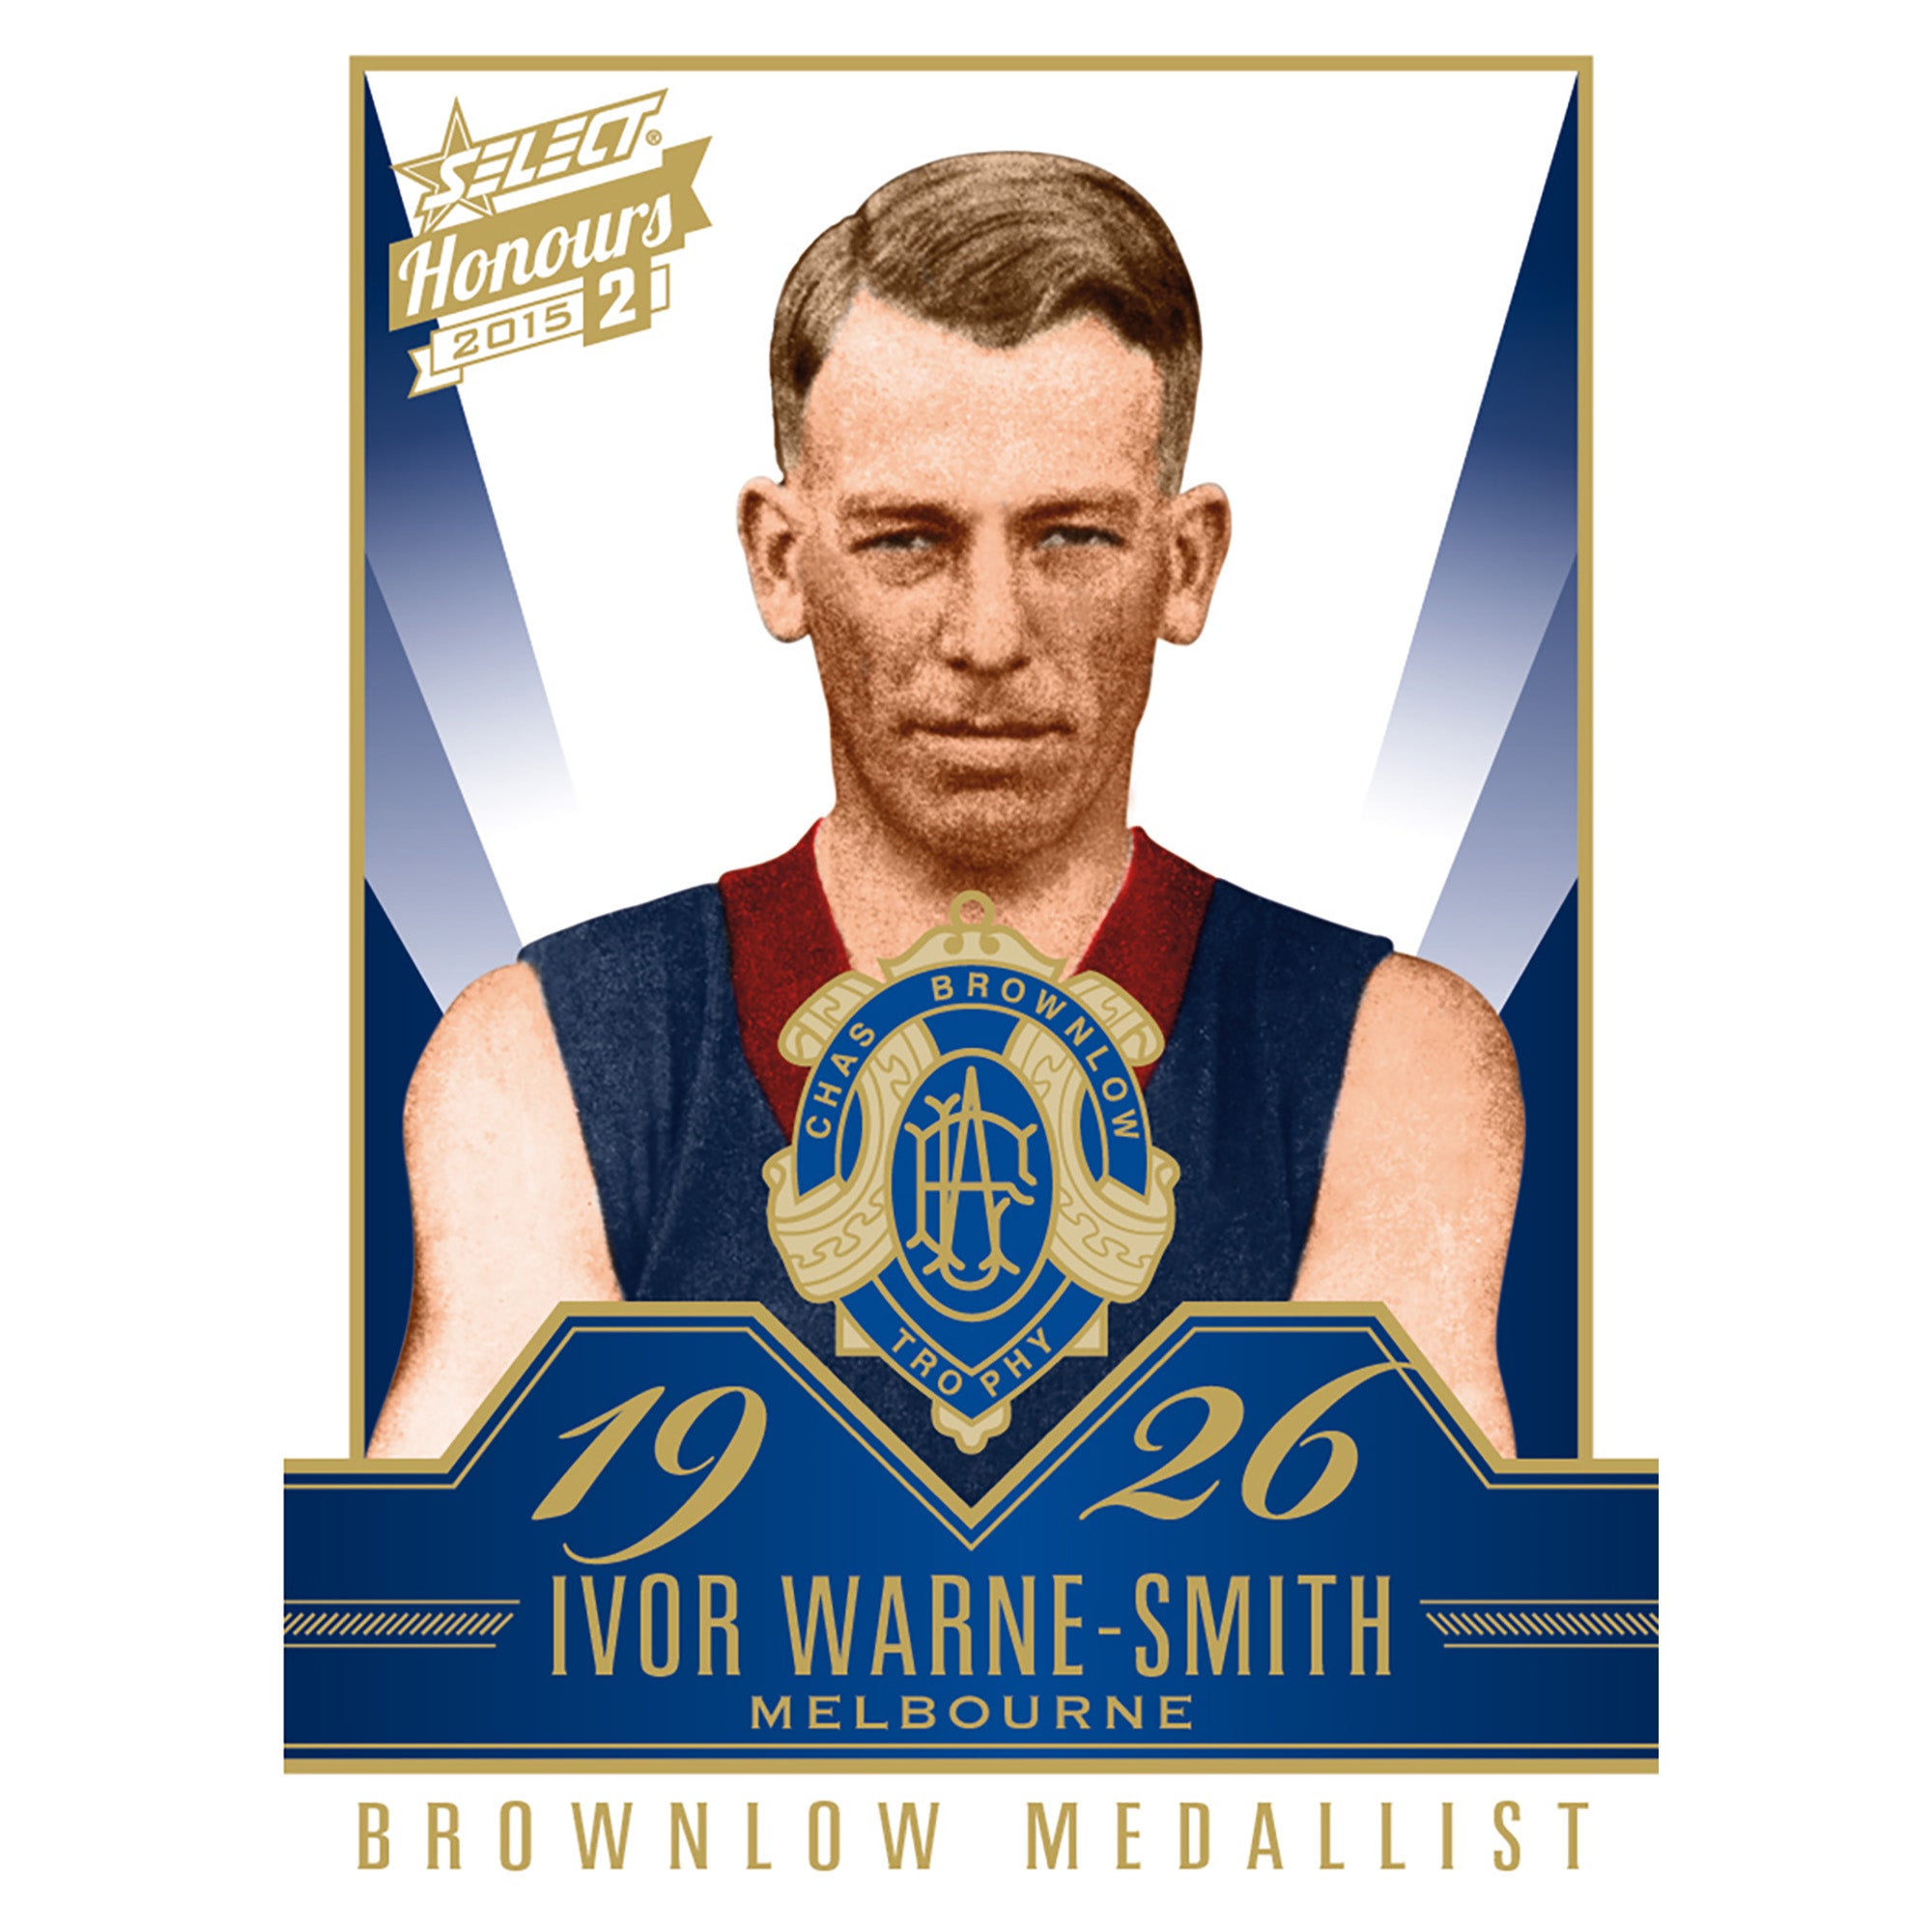 AFL Select Australia 2015 Honours 2 - Brownlow Gallery Ivor Warne-Smith Melbourne BG52